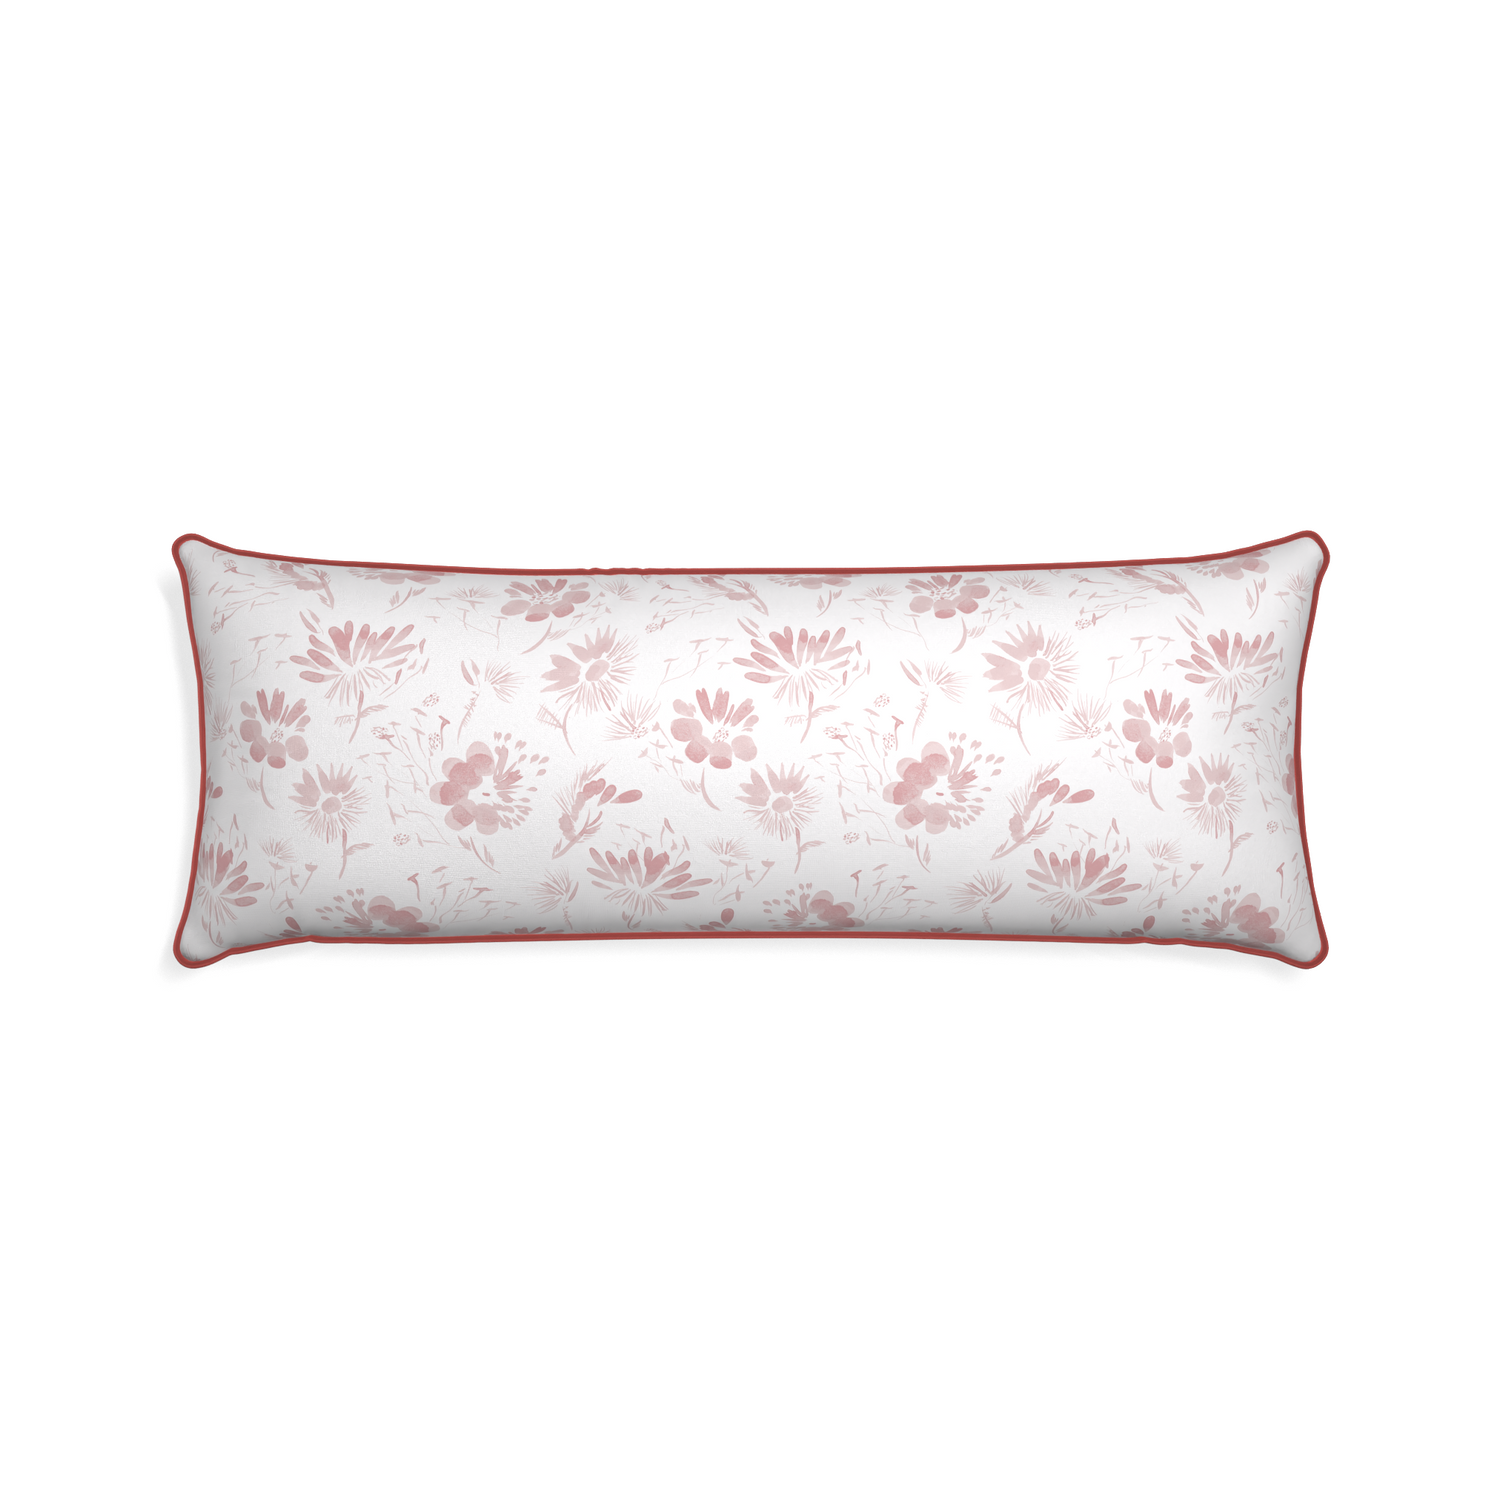 Xl-lumbar blake custom pillow with c piping on white background